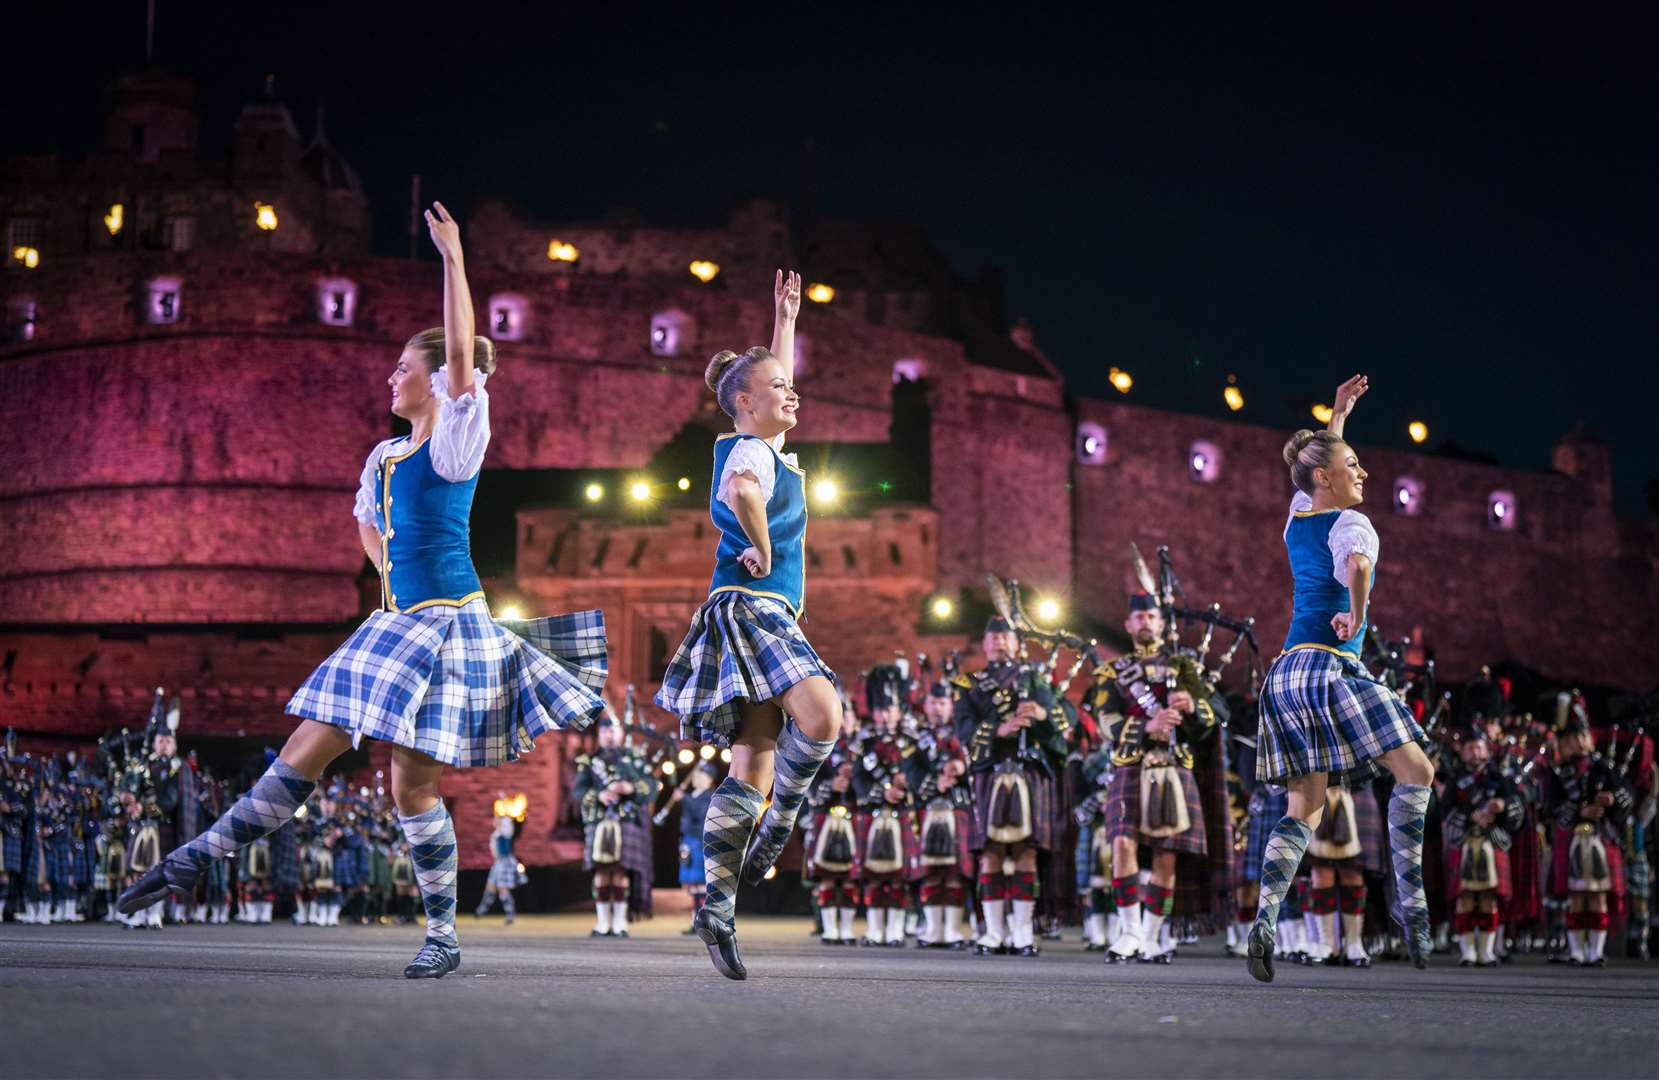 Highland dancers demonstrate their skill (Jane Barlow/PA)